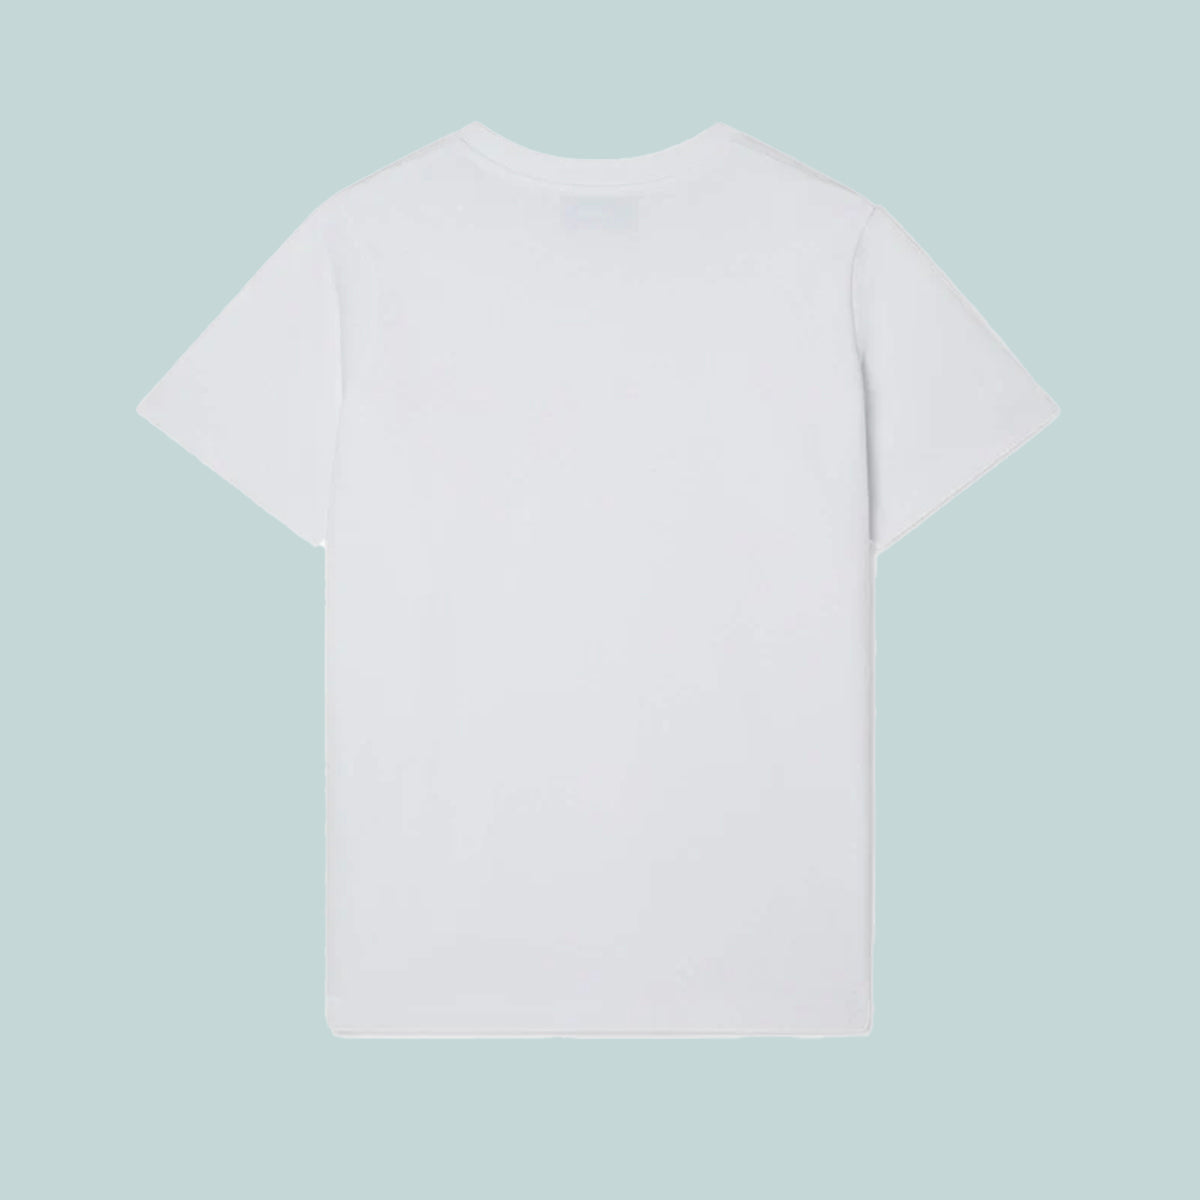 Le Joueur Printed T-Shirt White